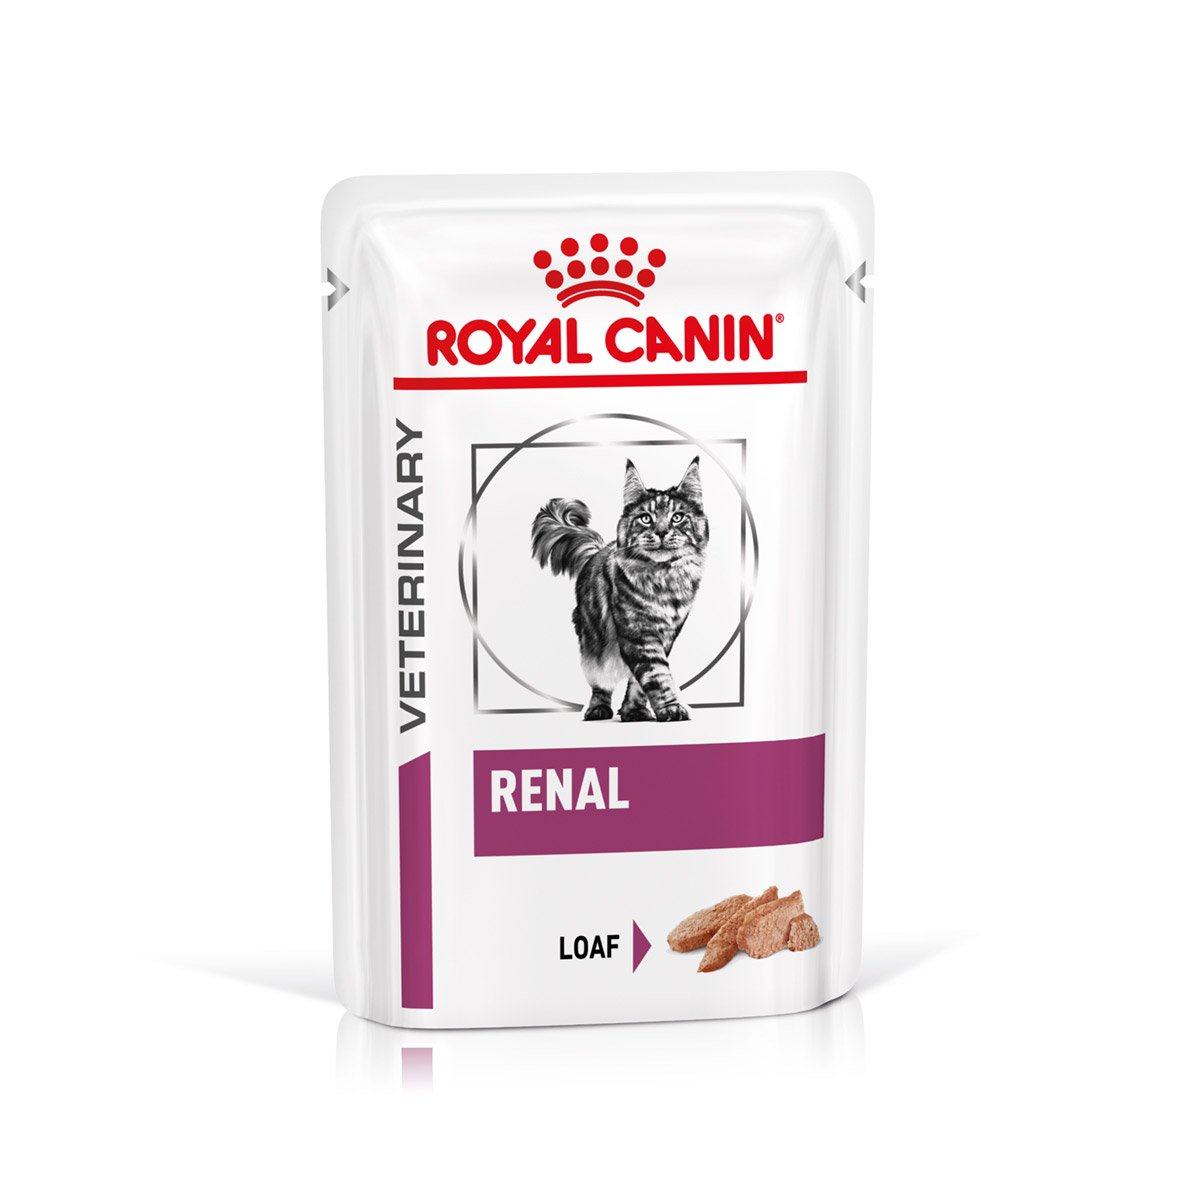 ROYAL CANIN® Veterinary RENAL Mousse Nassfutter für Katzen 48x85g von Royal Canin